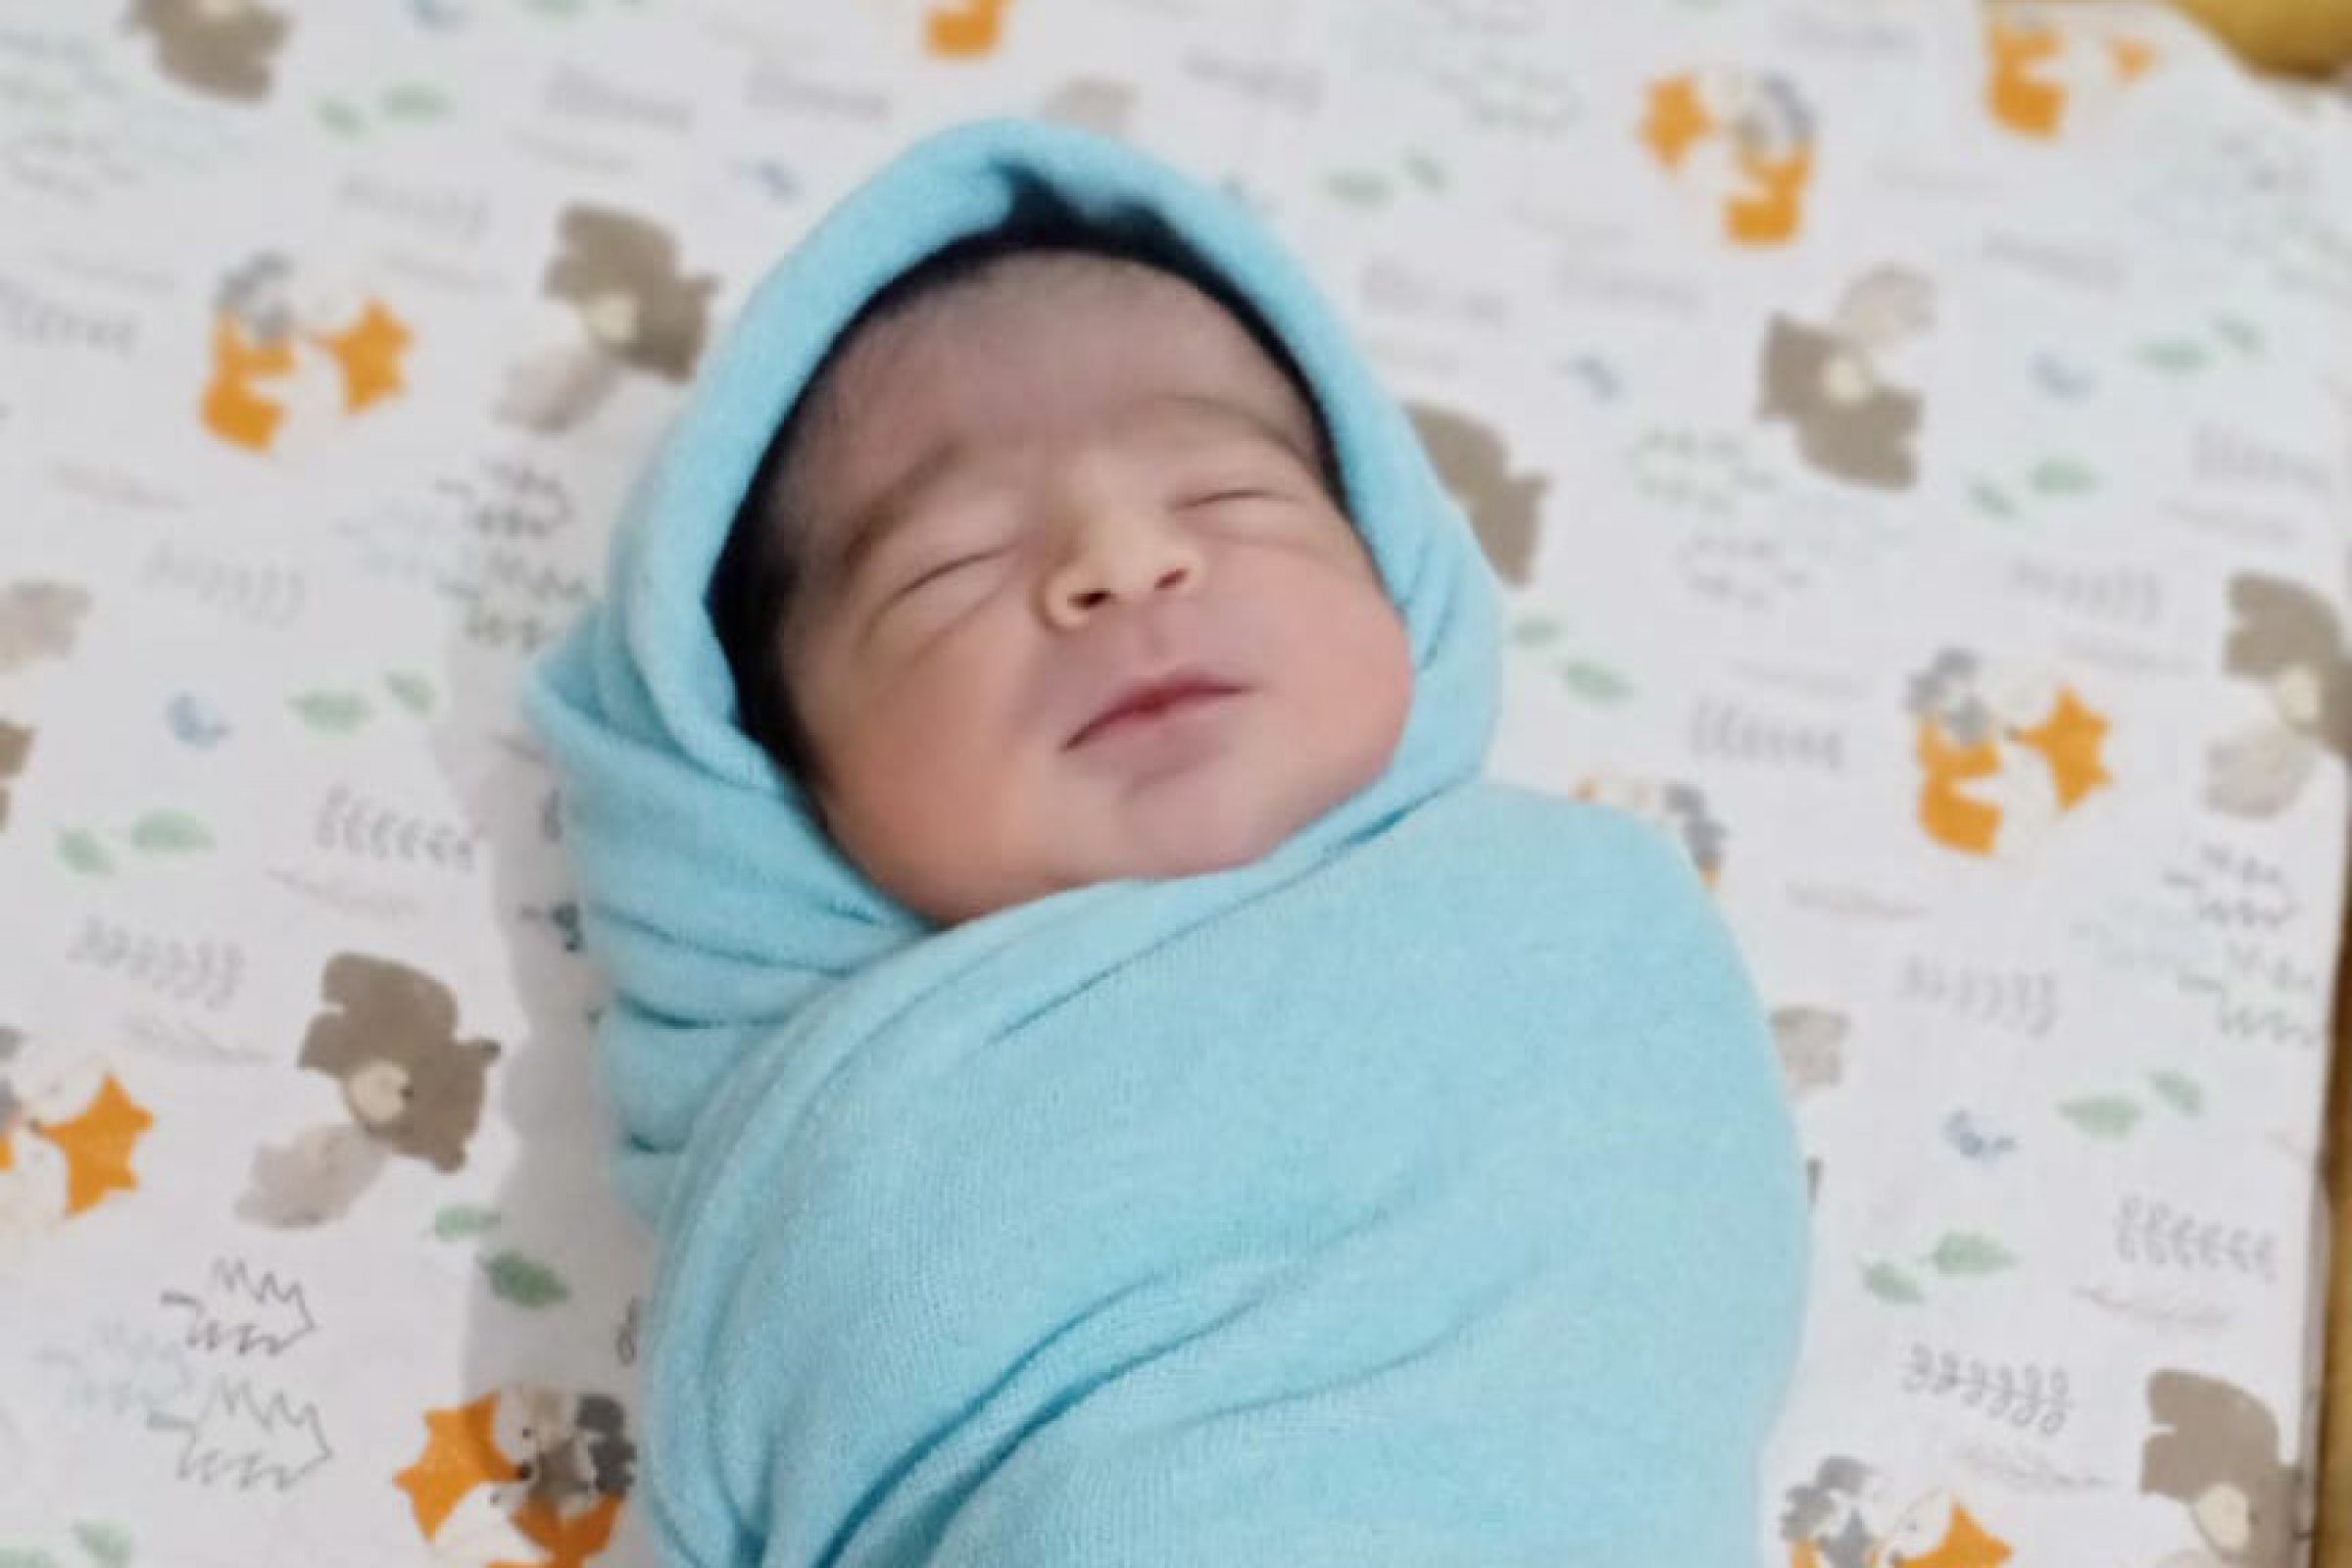 Muhammad Ali was born at a maternity unit in Dera Murad Jamali